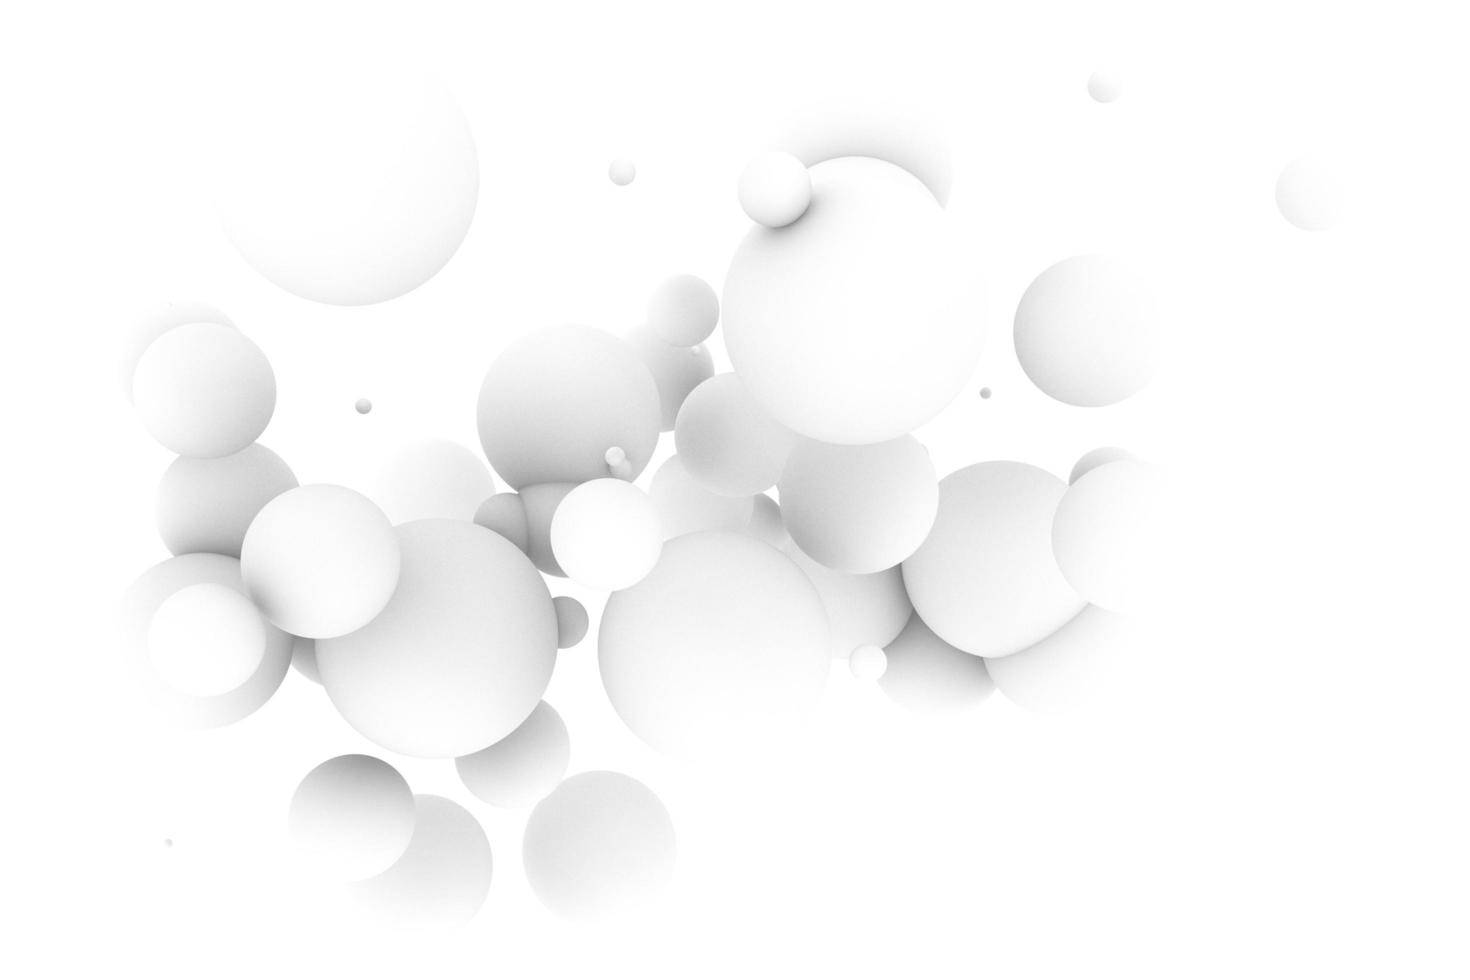 Snow white balls 3d illustration. Realistic dynamic spheres background photo